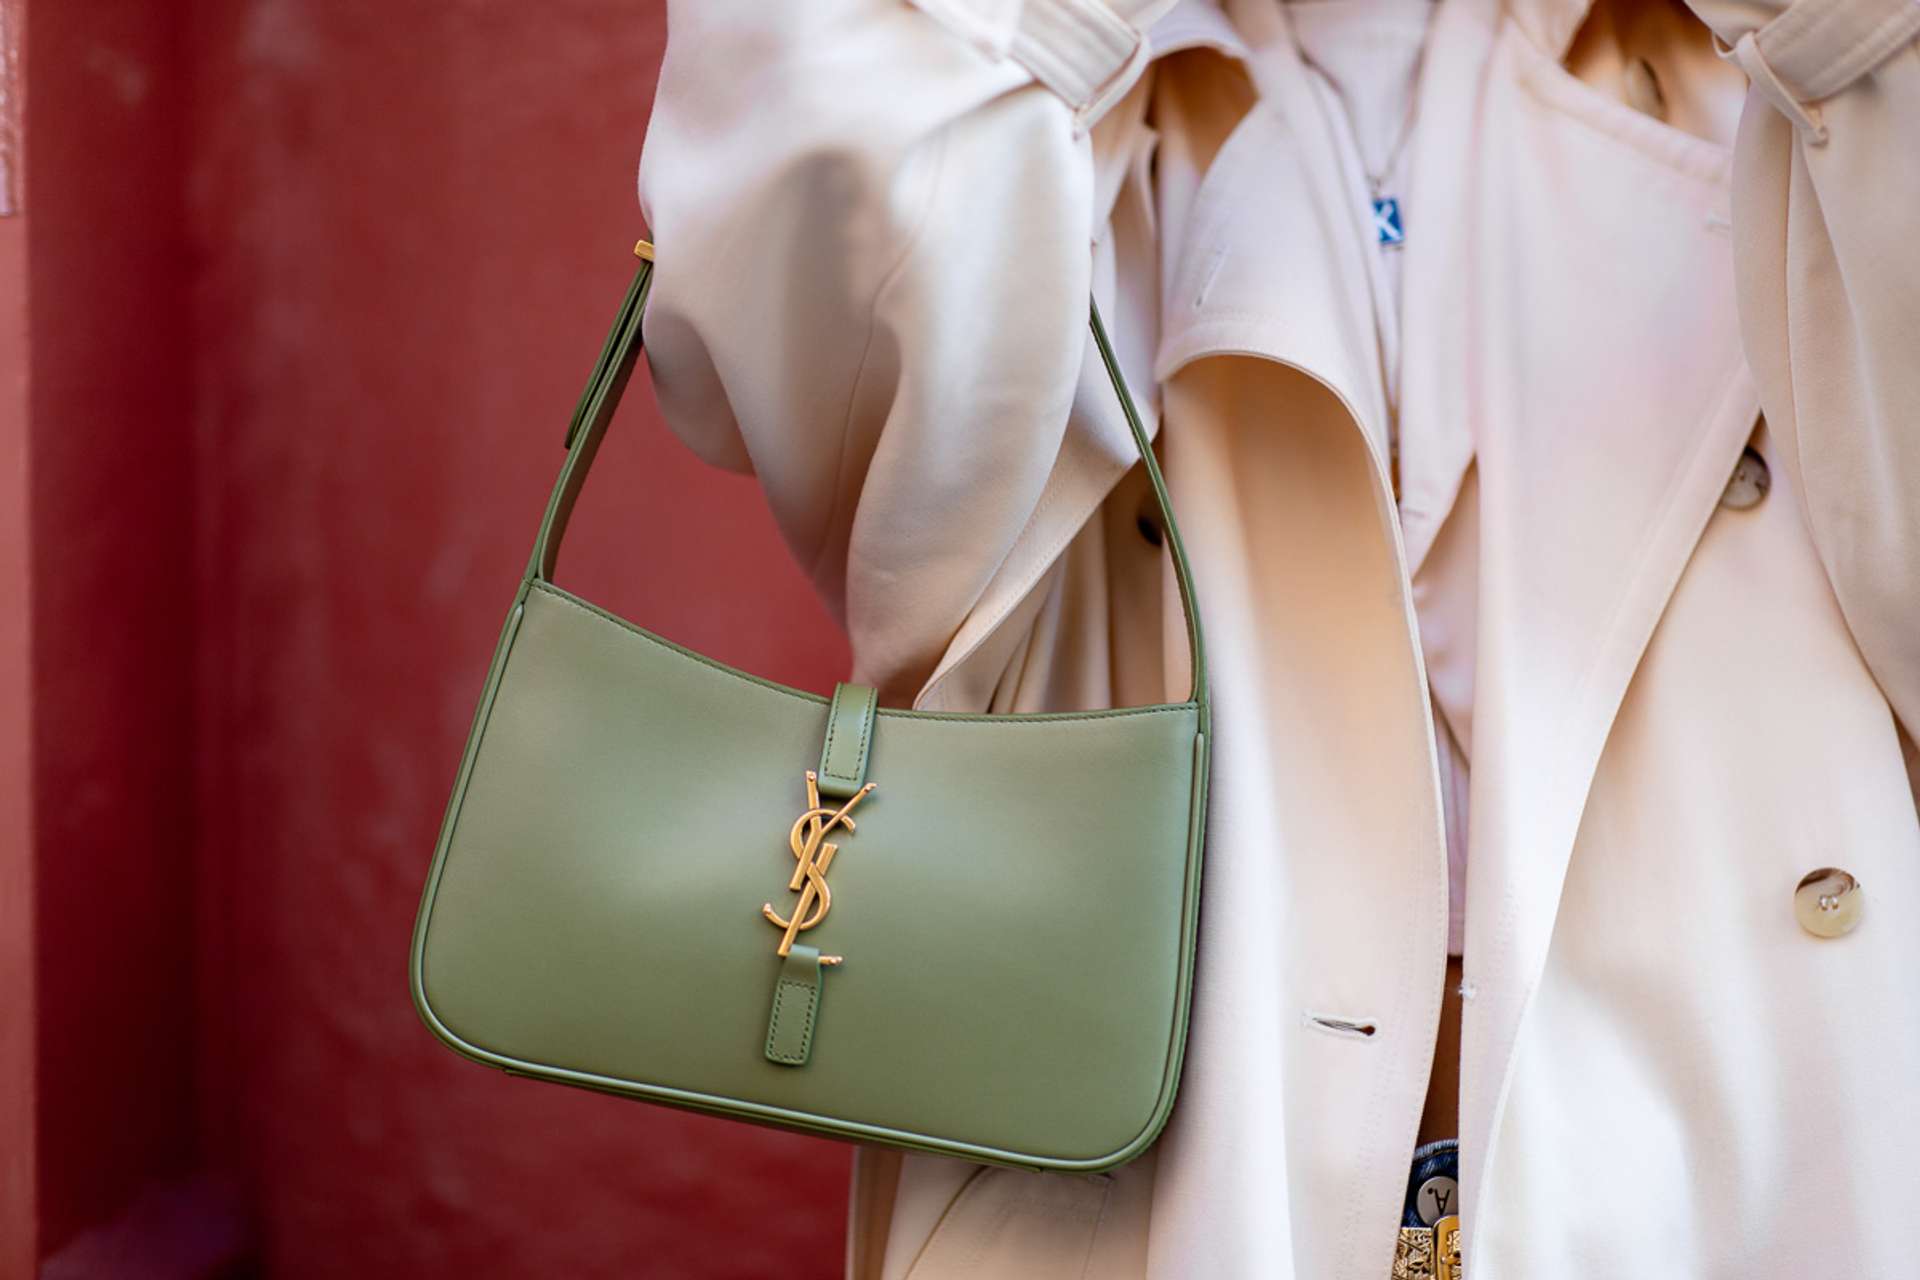 An image of a model, holding a green Yves Saint Laurent Le 5 à 7 bag.